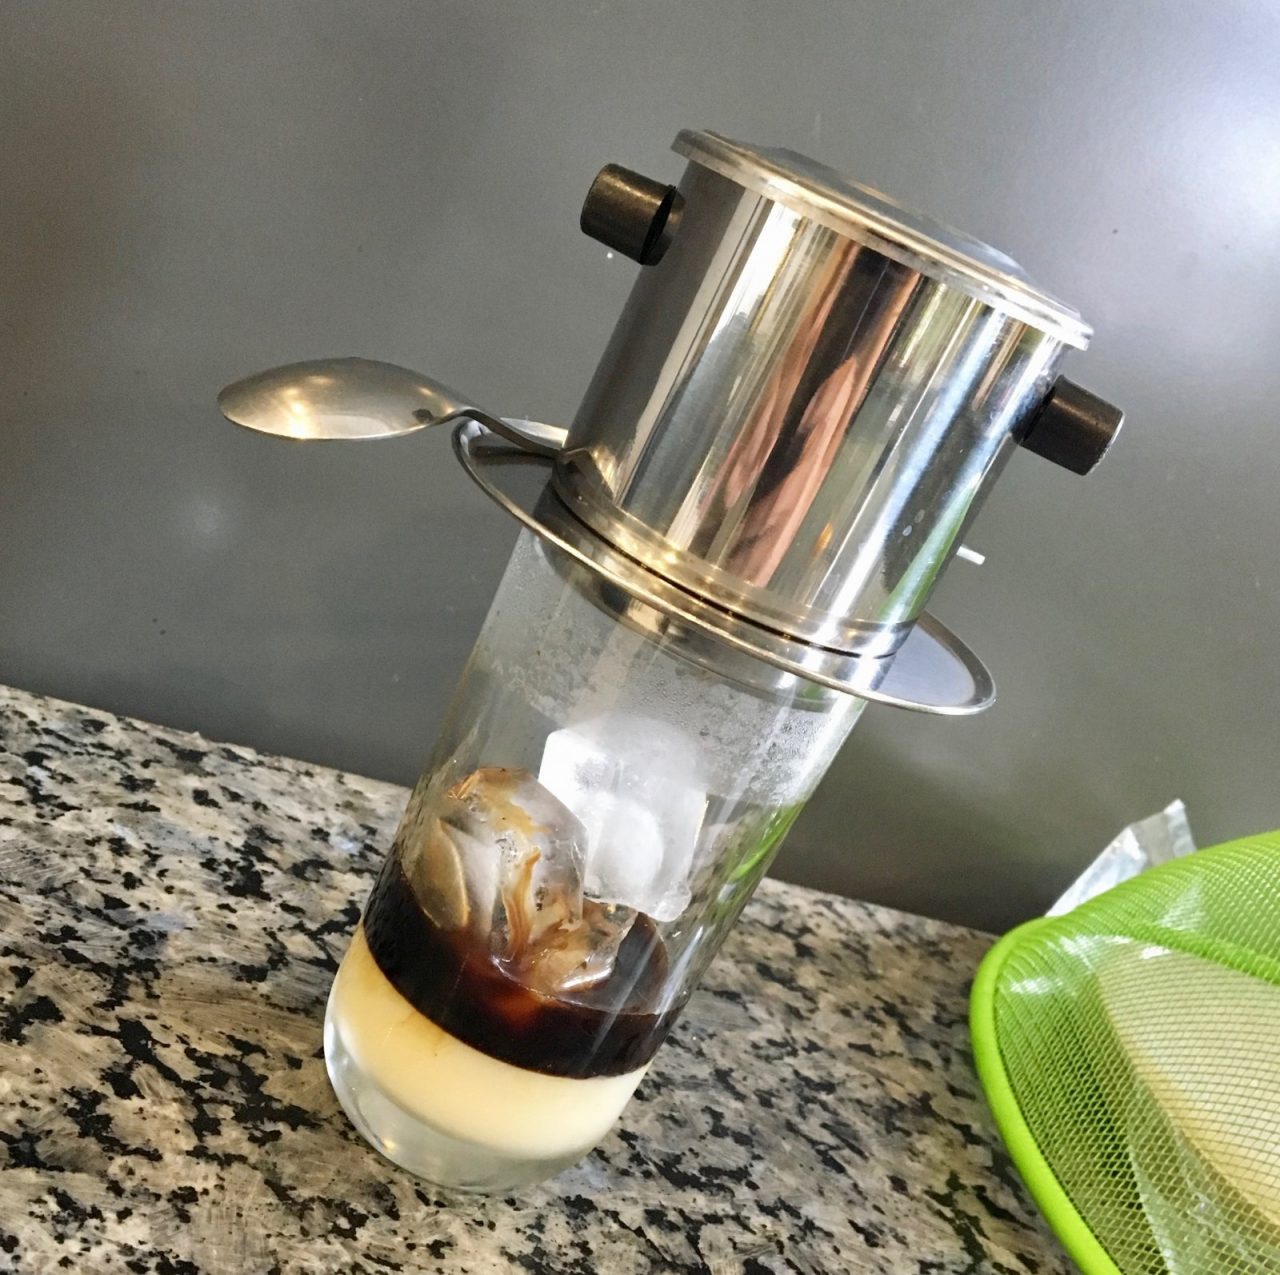 Vietnamese Coffee - Caphe Sua Da in making